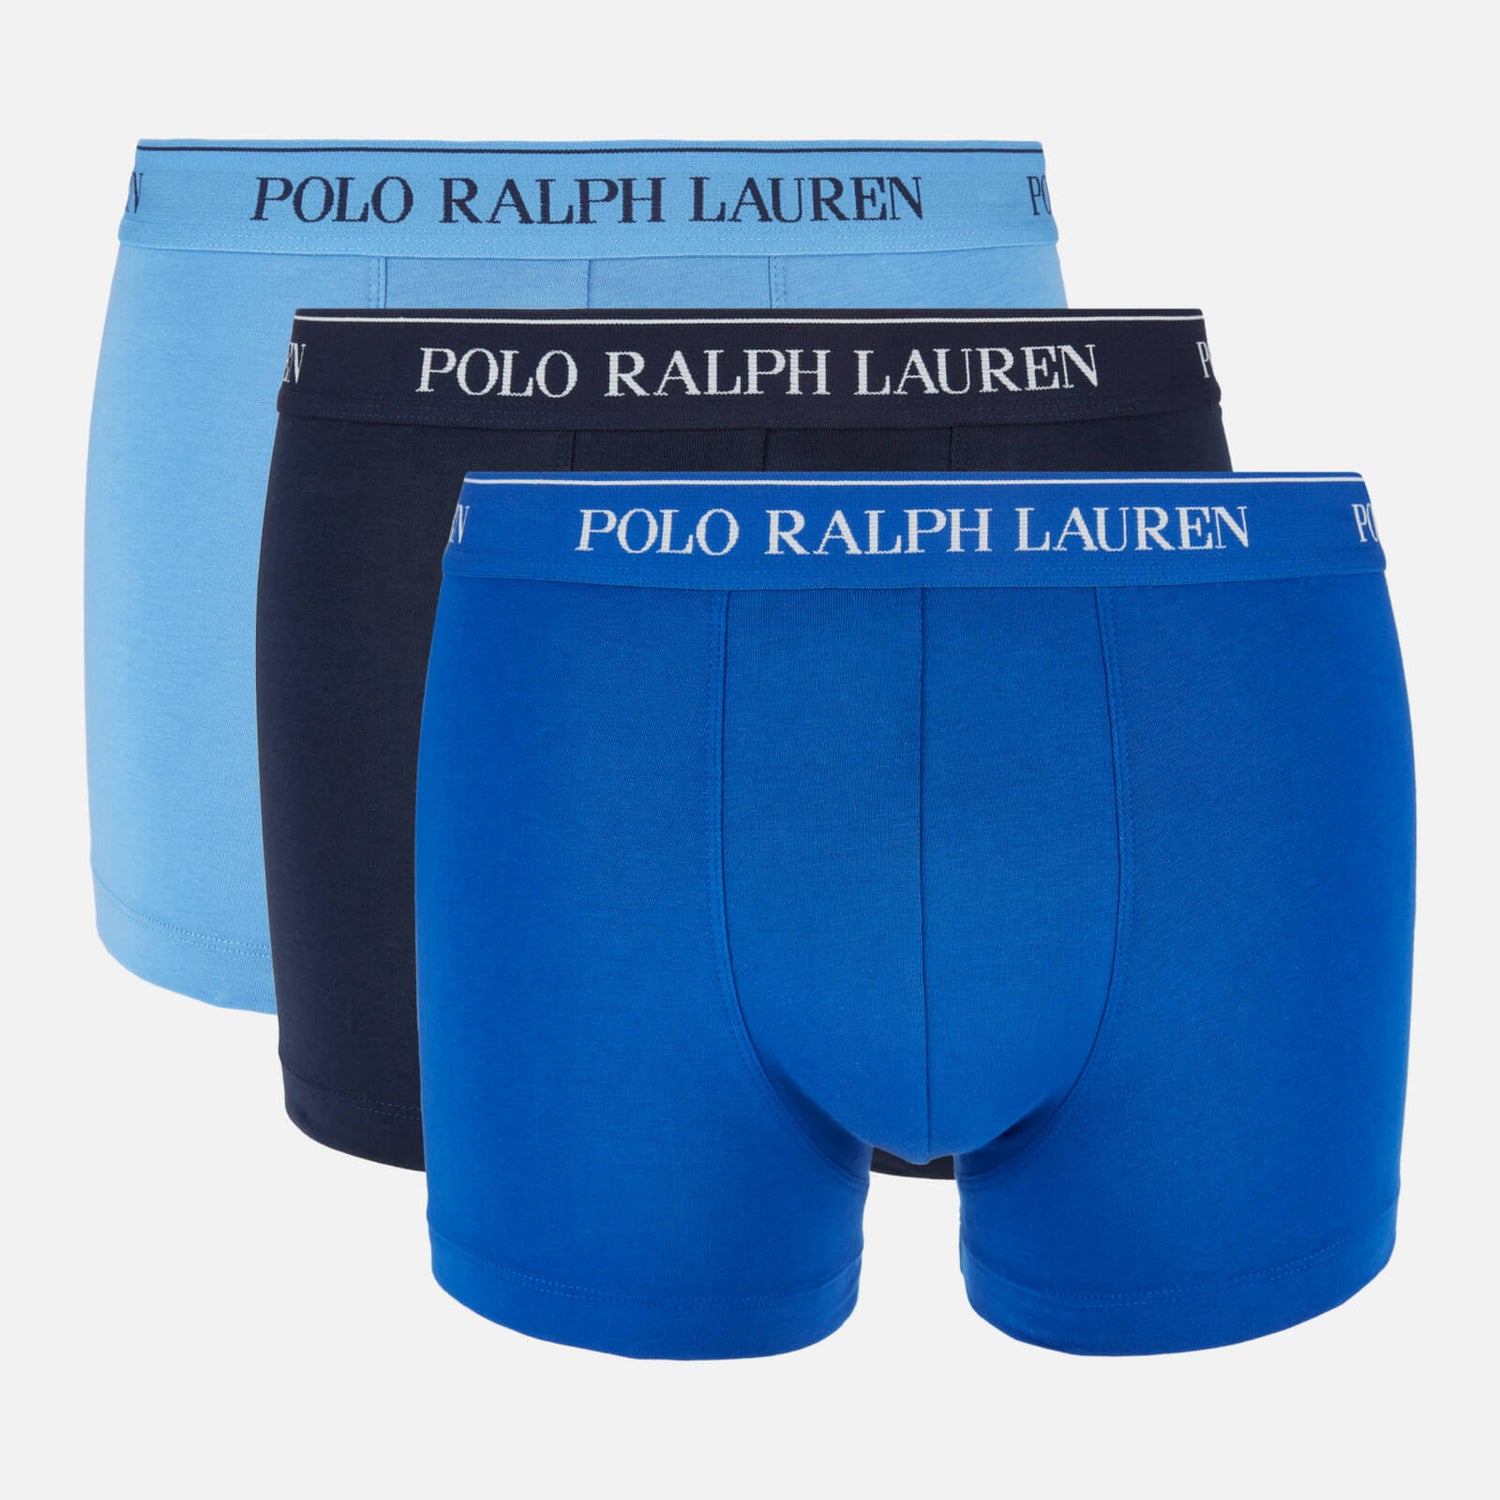 Polo Ralph Lauren Men's 3 Pack Trunk Boxer Shorts - Blues | TheHut.com